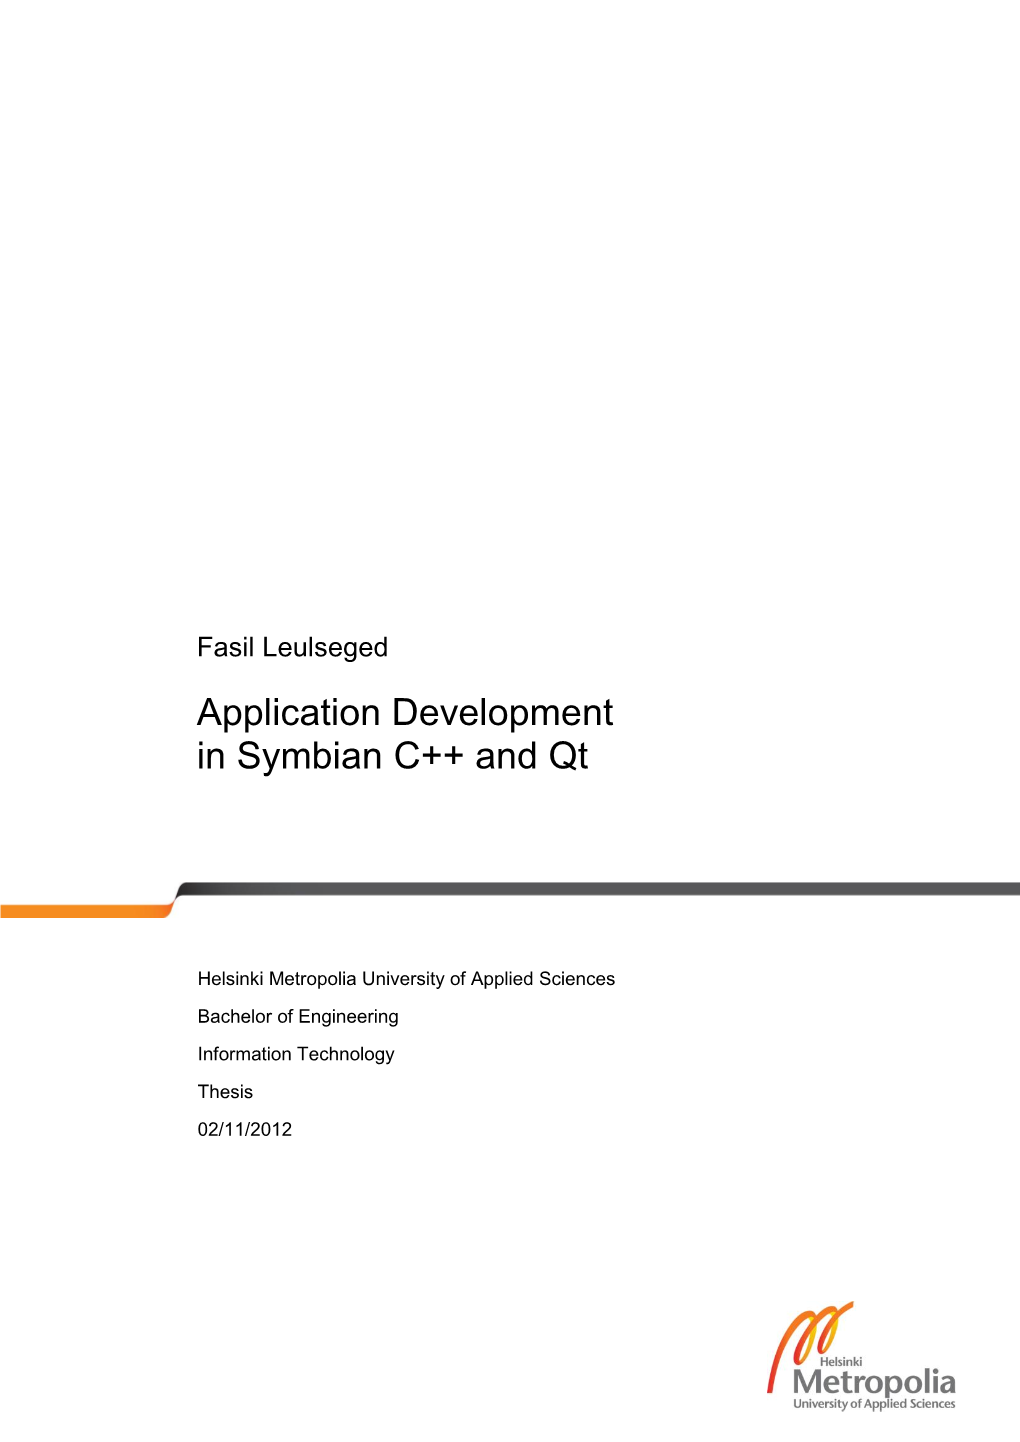 Application Development in Symbian C++ and Qt